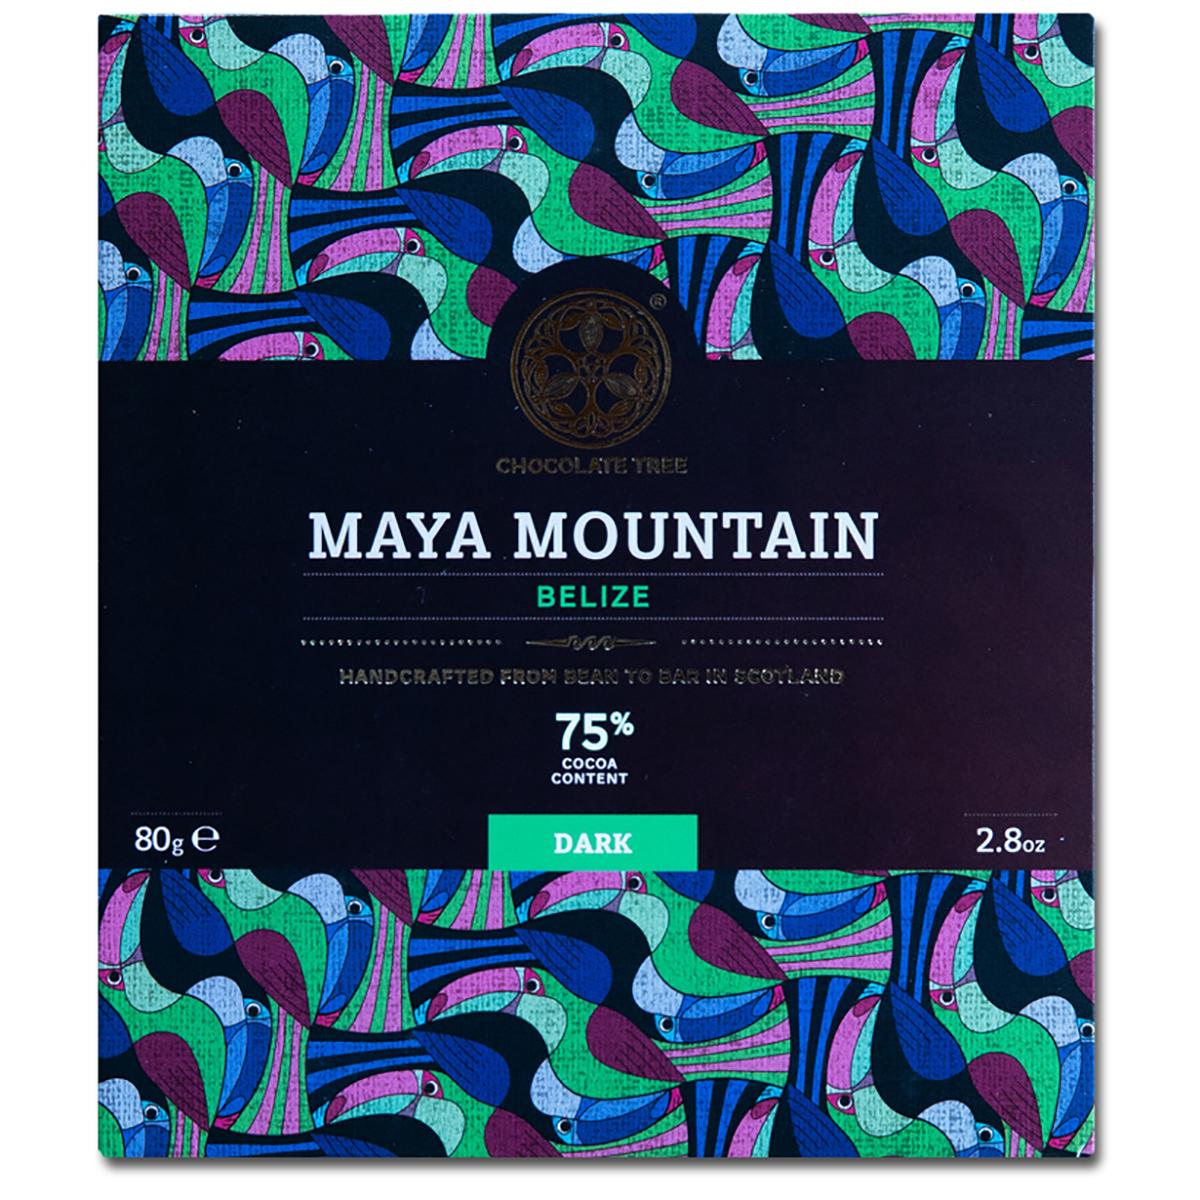 Kakaw.se's Maya Mountain Belize 75%'